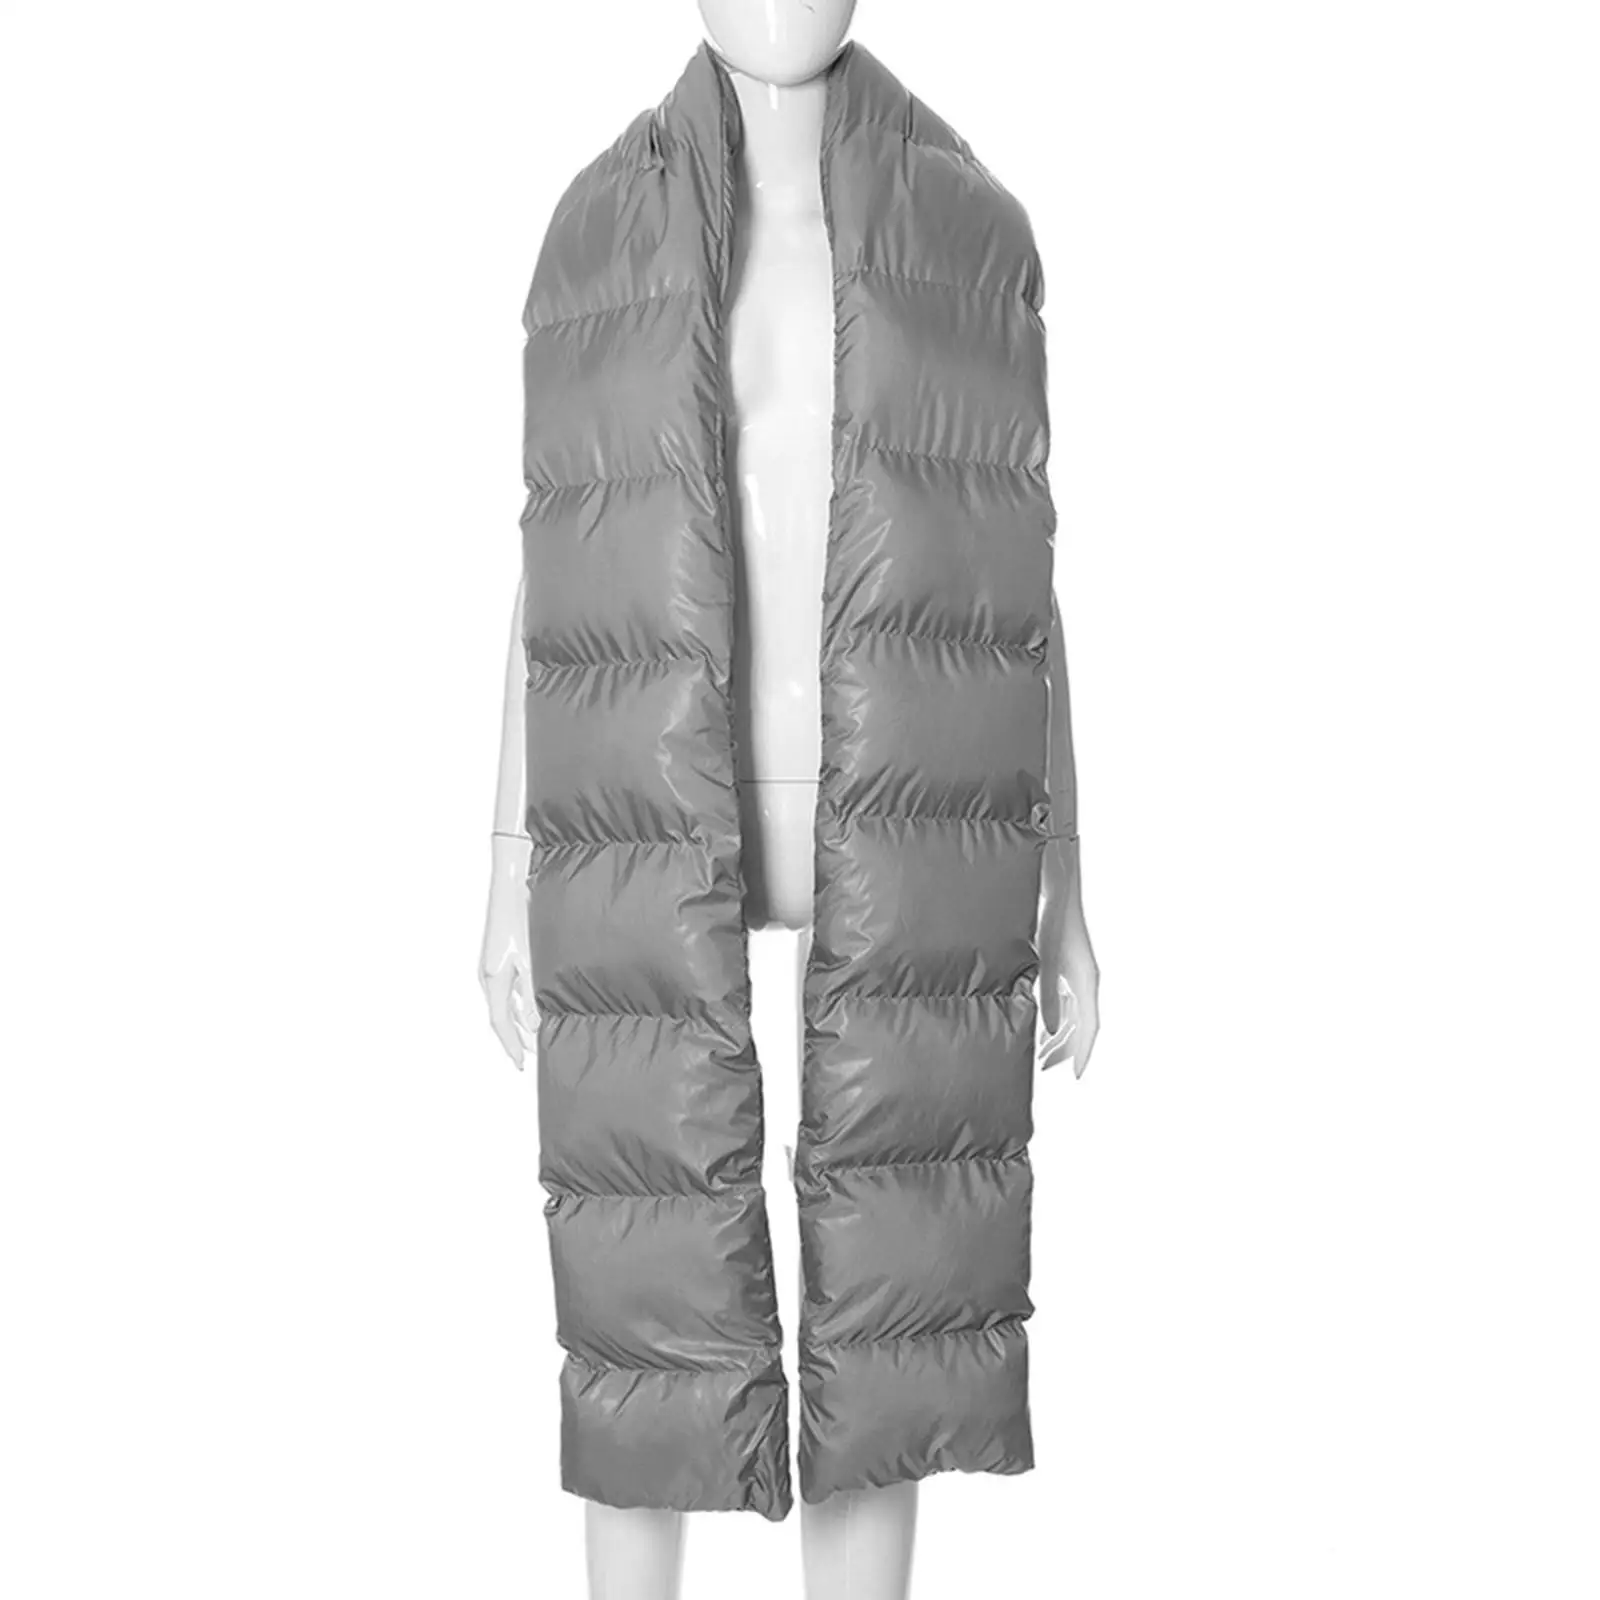 Winter Scarf Soft Warm Long Neckerchief Stylish Solid Color Lightweight Wrap